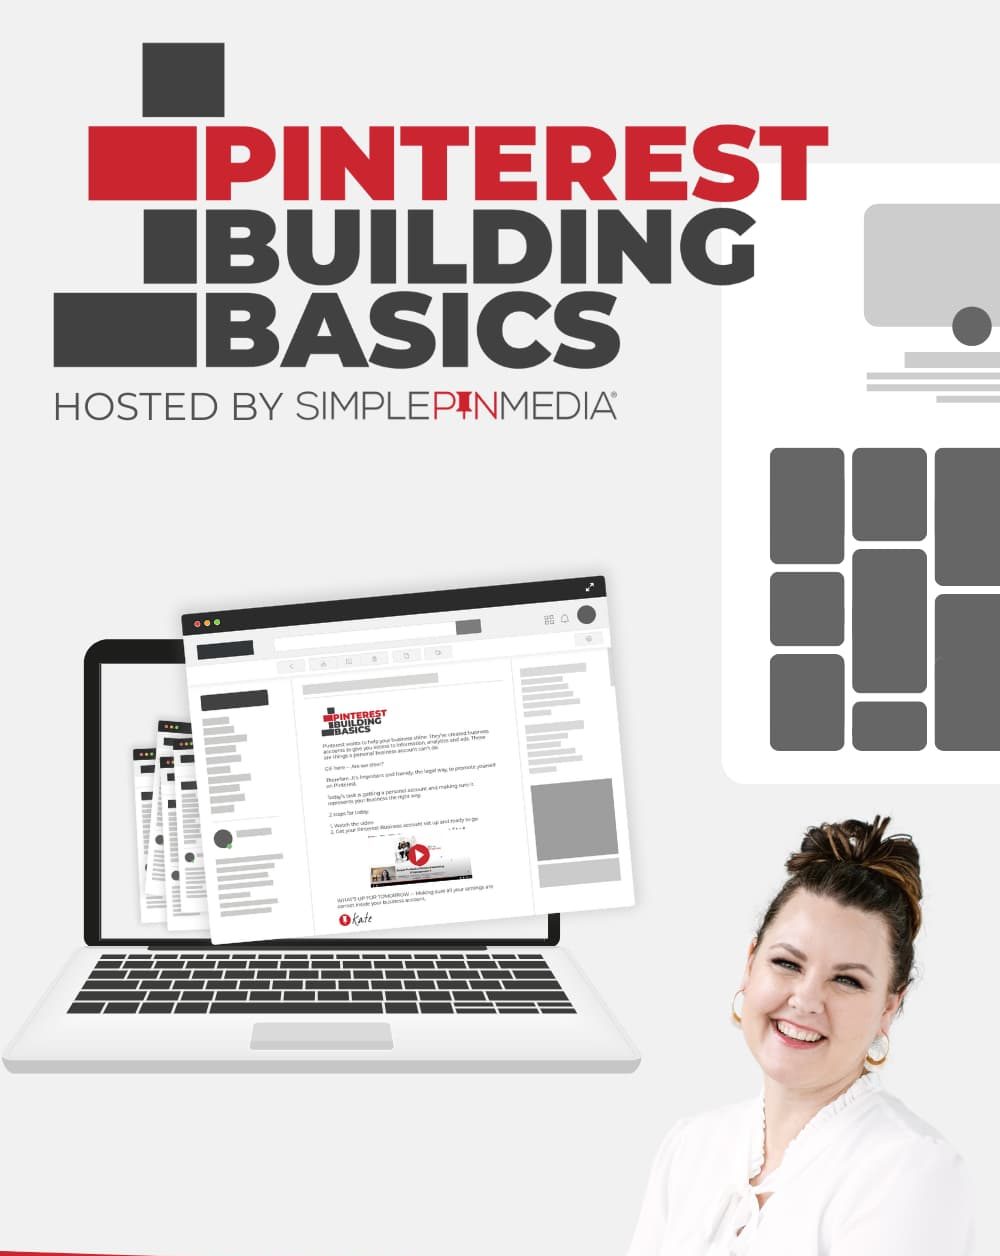 Pinterest Building Basics email Challenge ad.